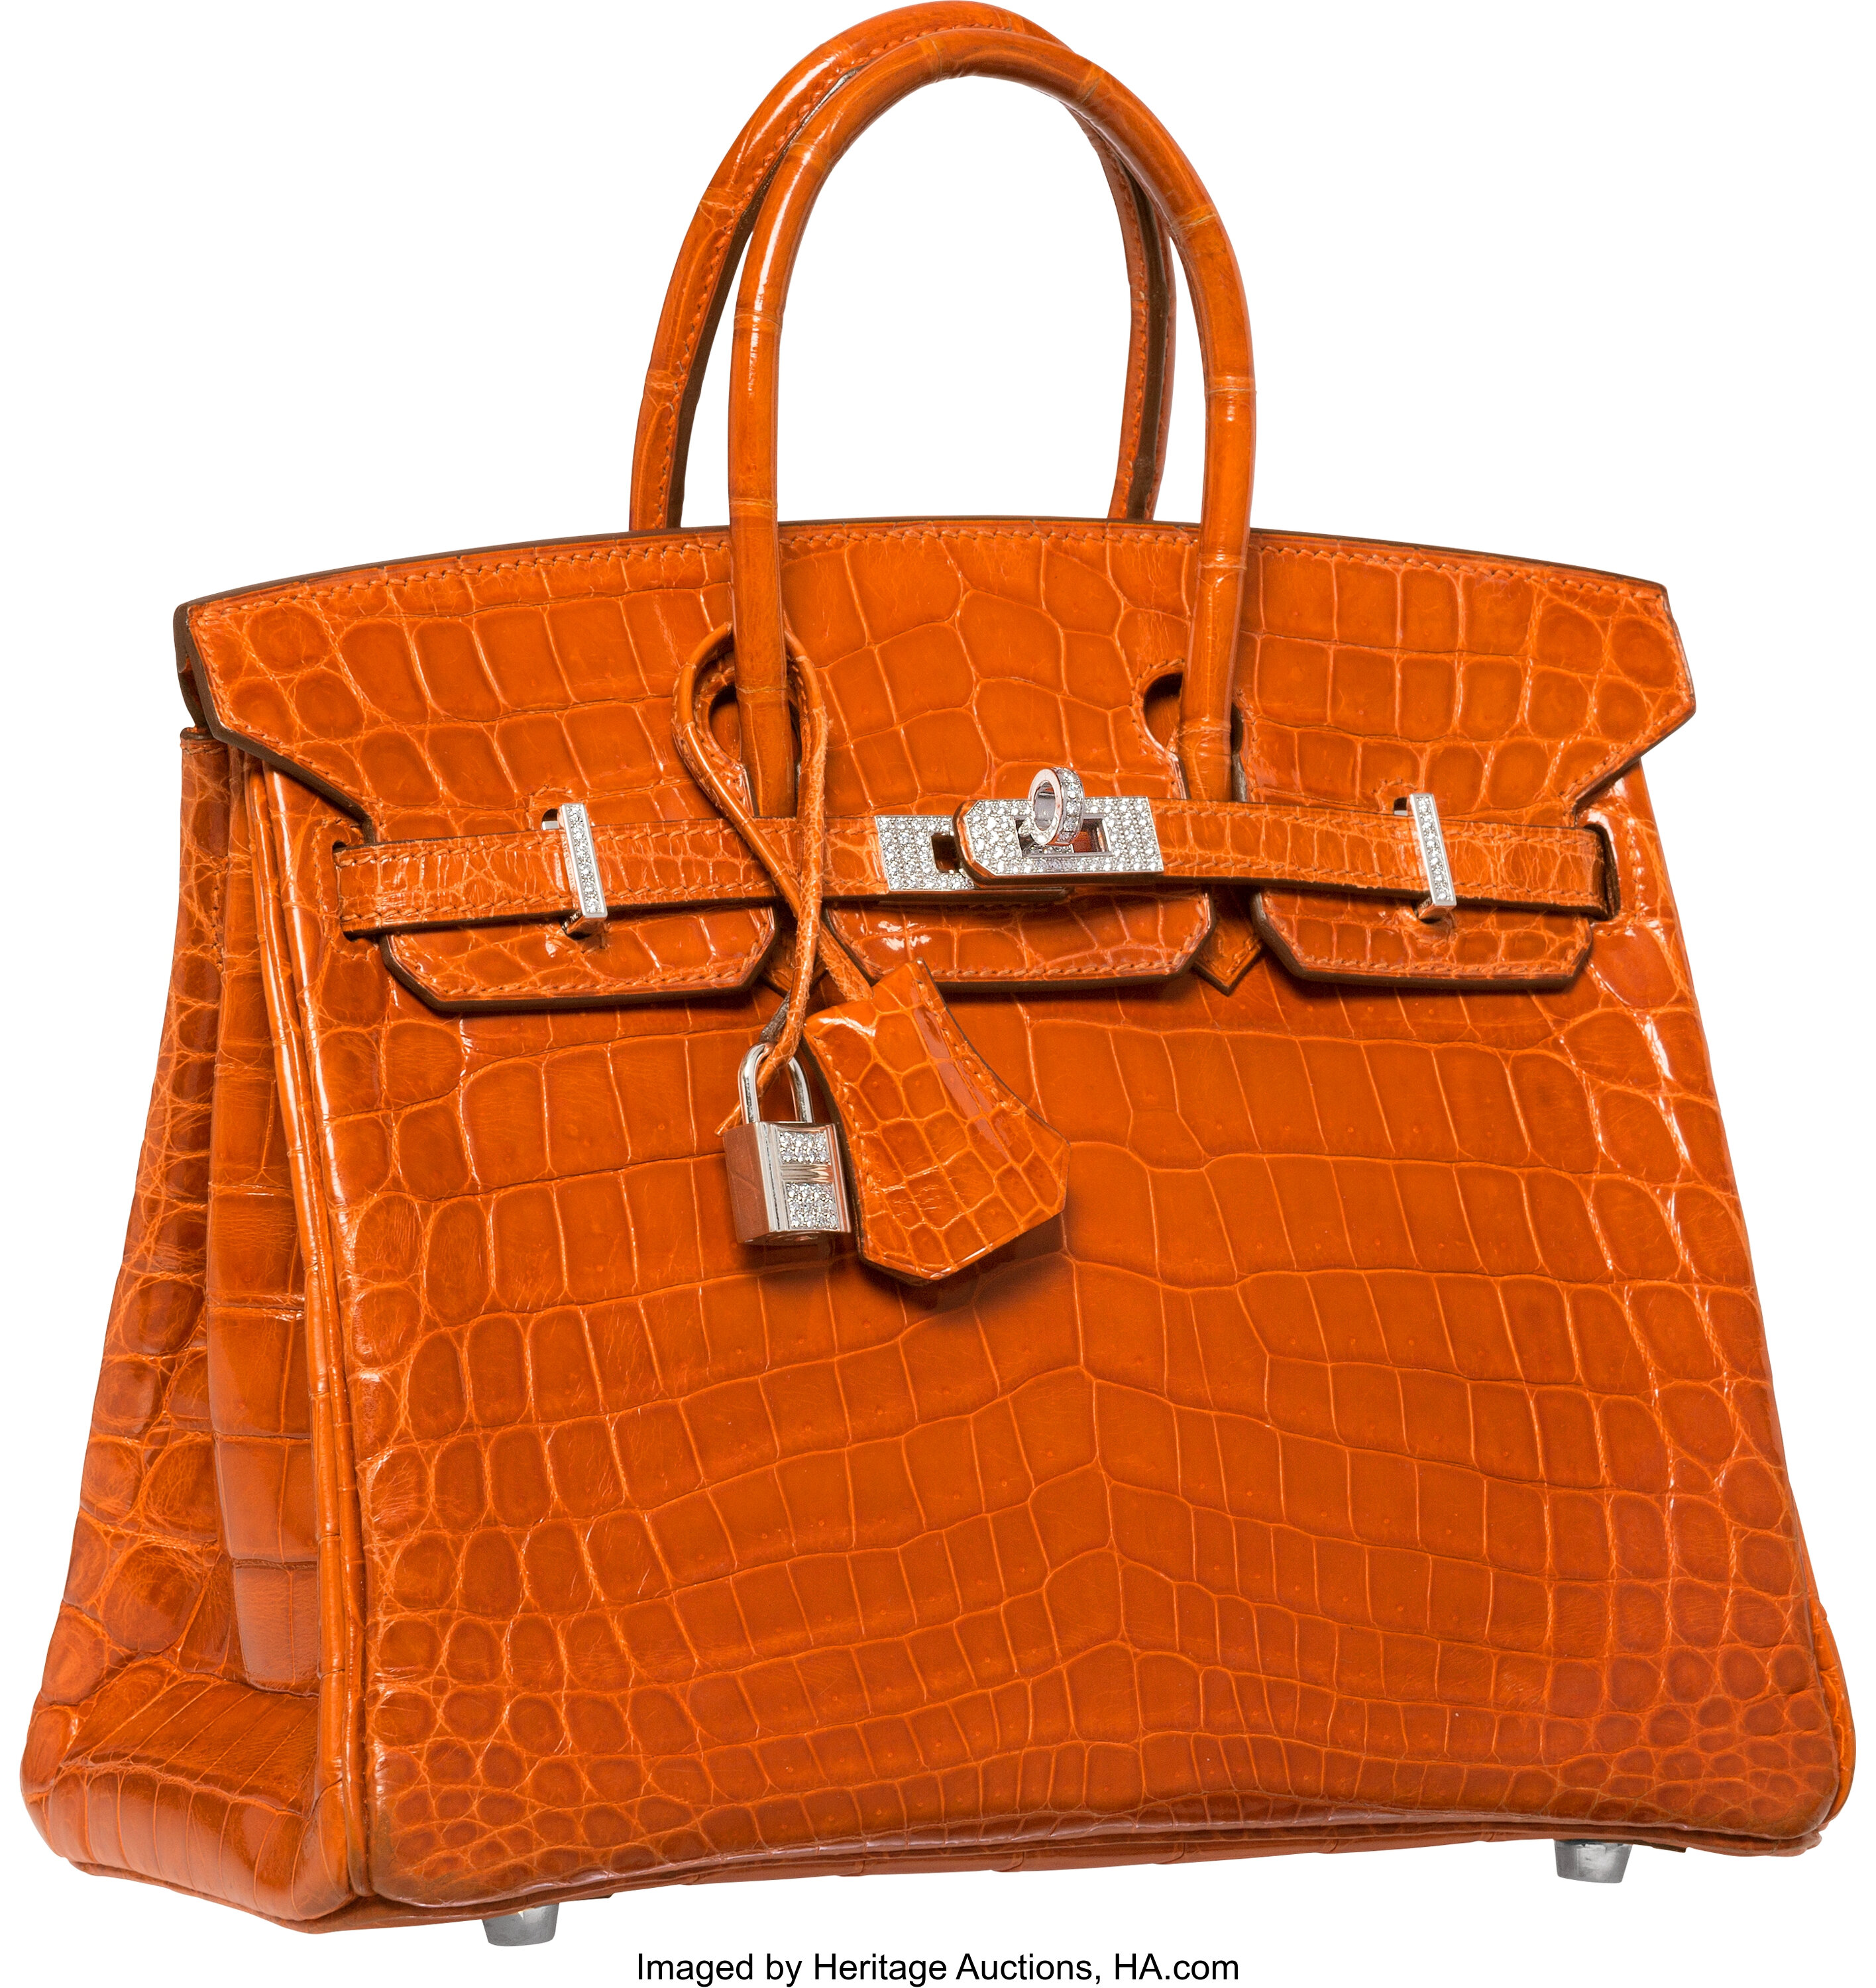 Hermès birkin bag made from crocodile skin and diamonds bought for